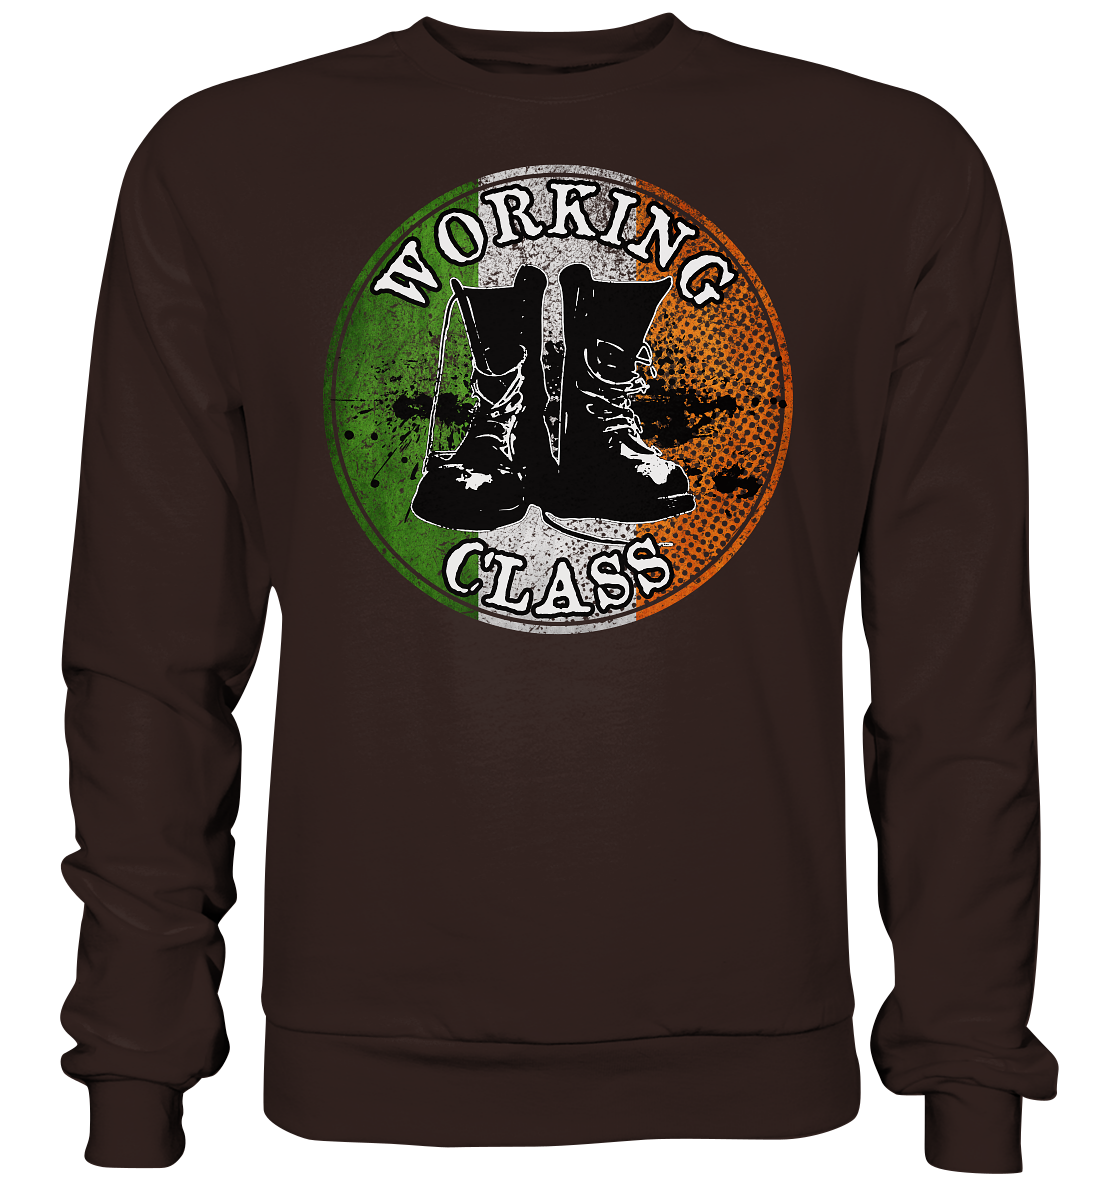 Working Class "Ireland" - Basic Sweatshirt